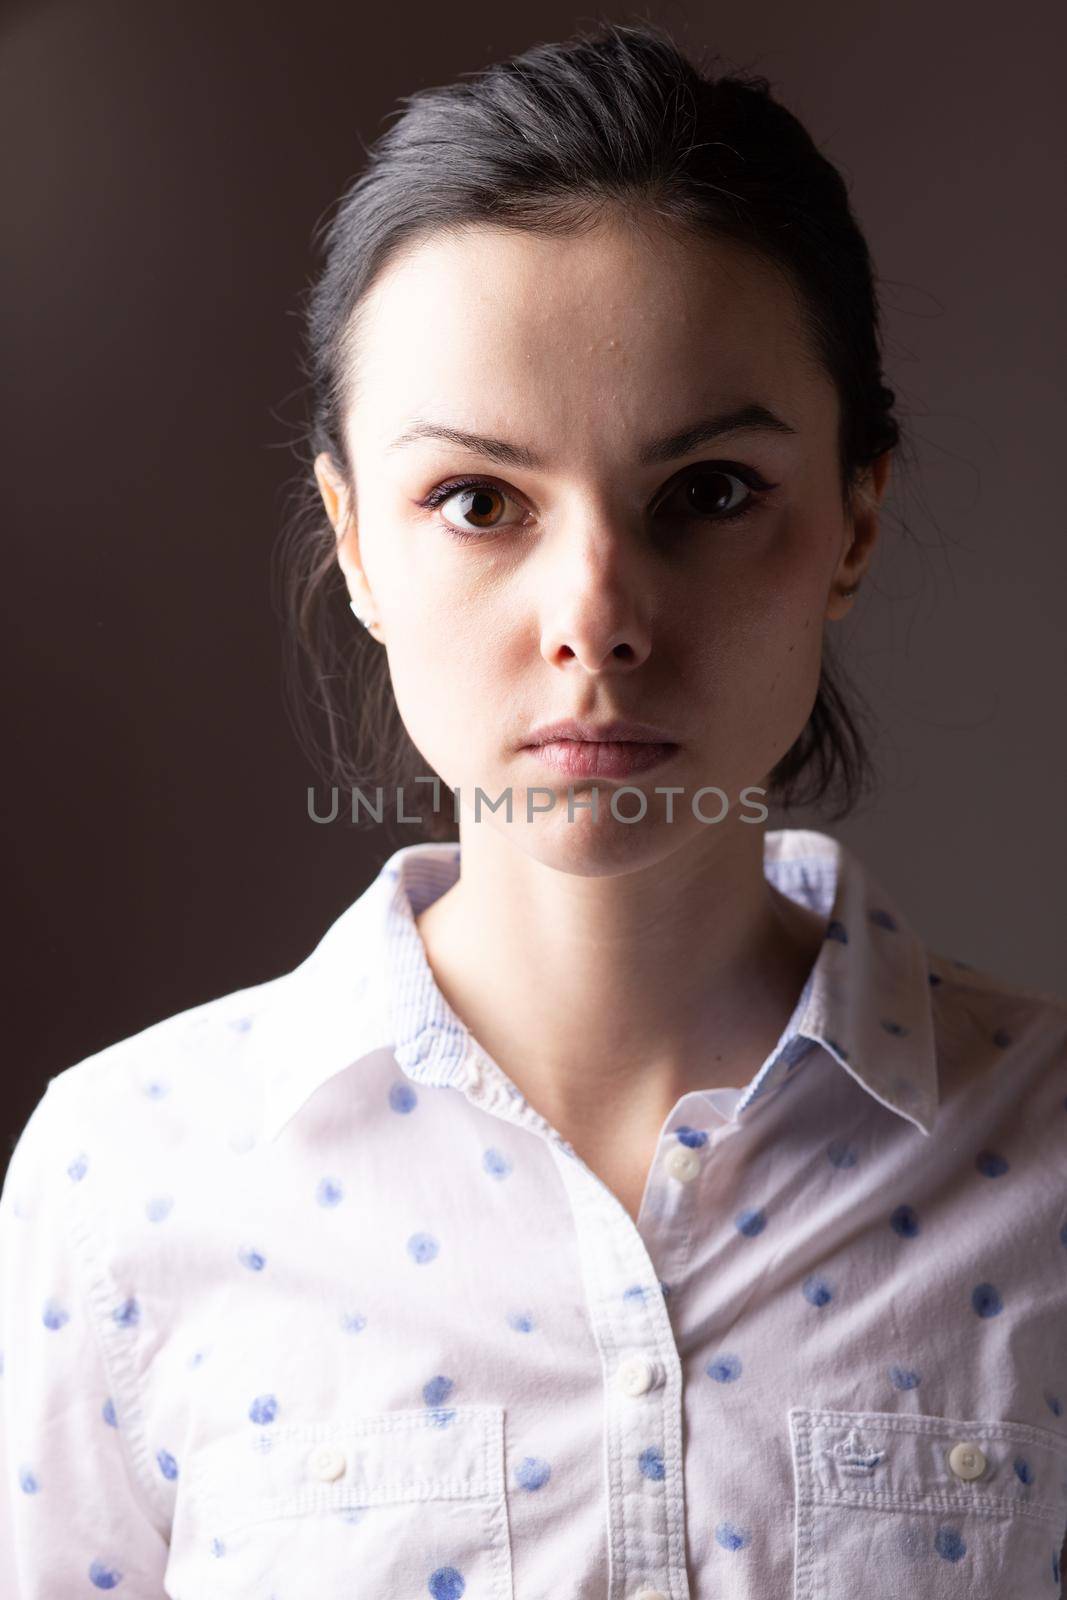 brunette woman in white polka dot shirt. High quality photo